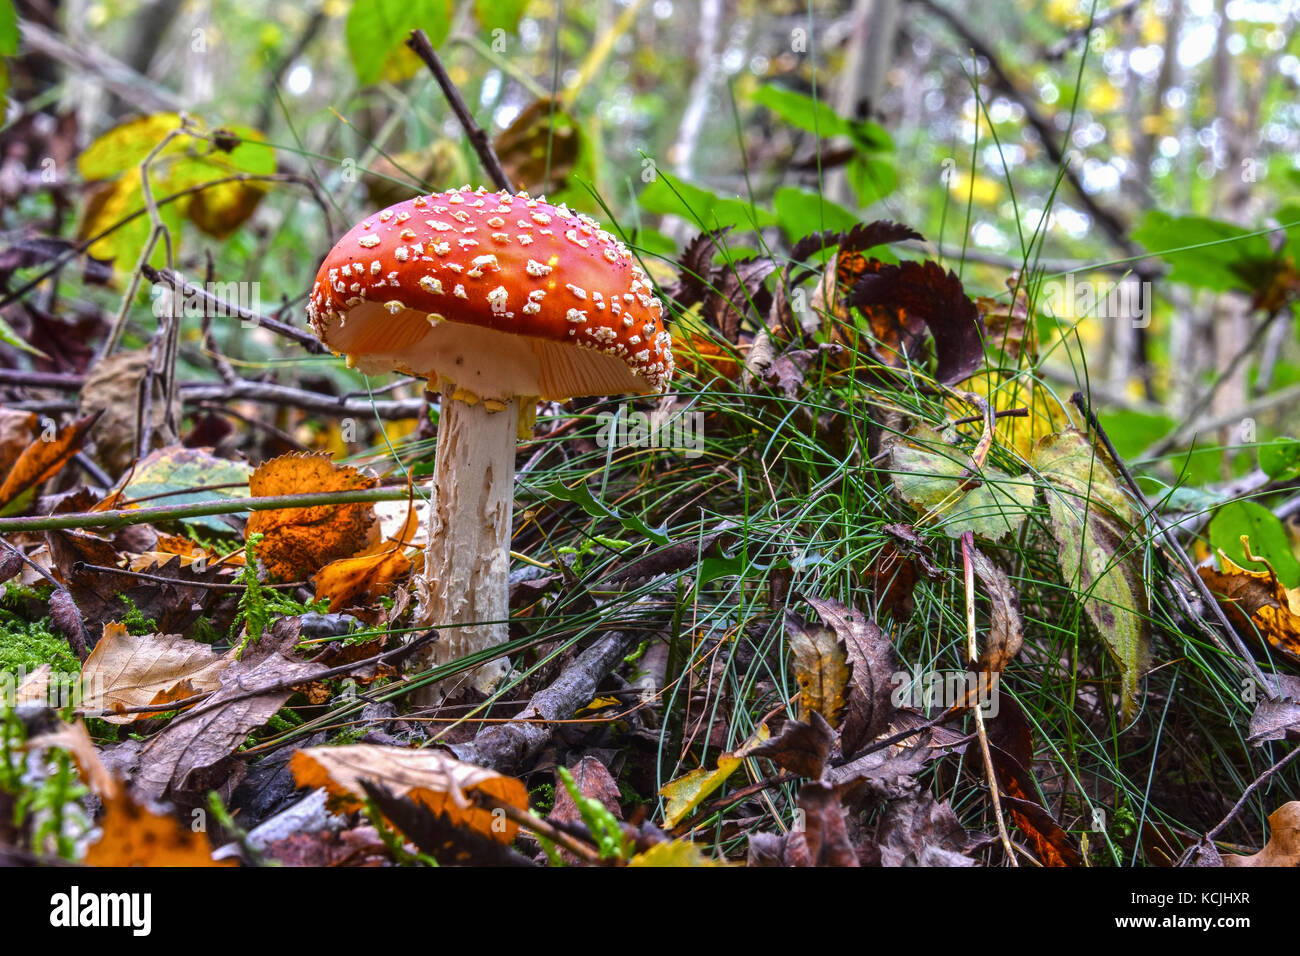 Fly agaric mushroom, Amanita muscaria, in its natural environment. Stock Photo